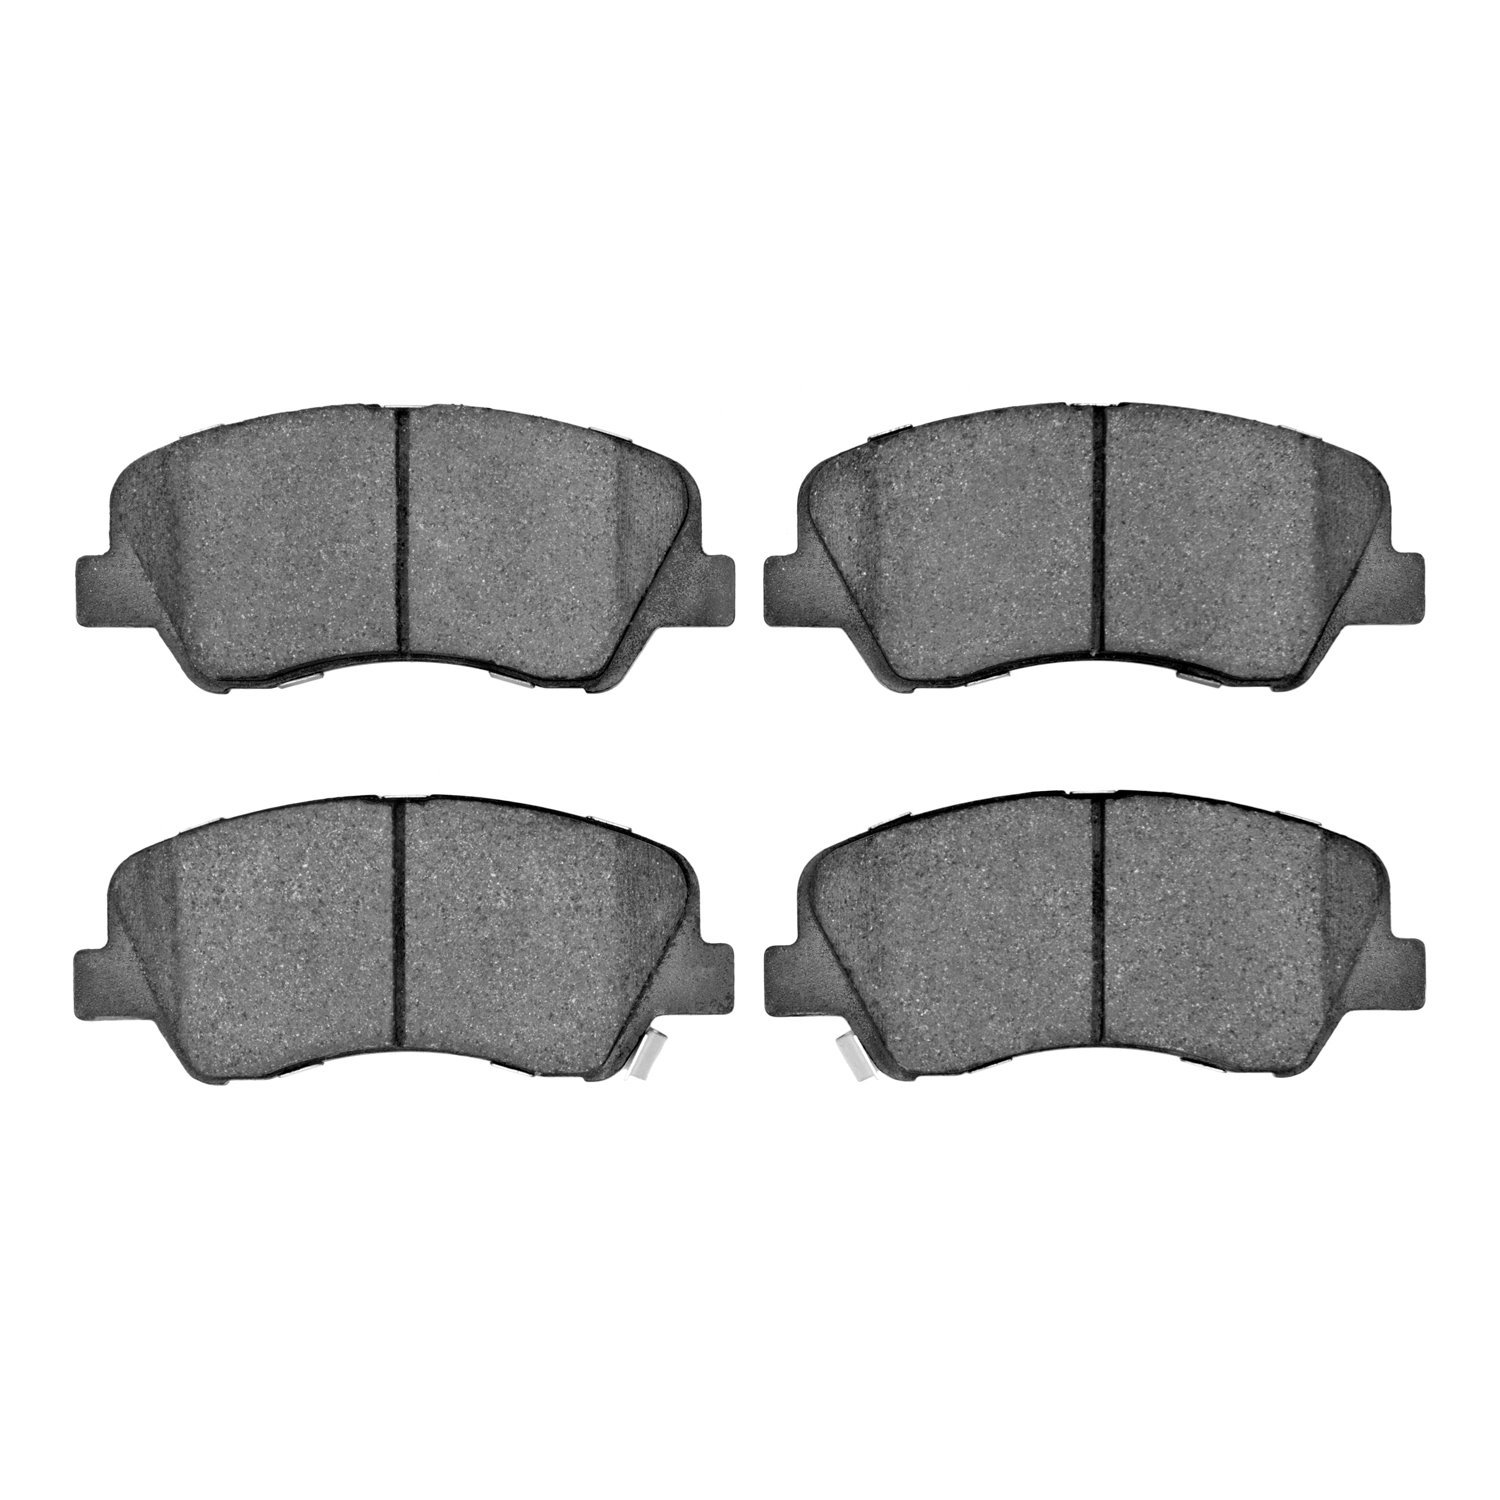 1551-1593-00 5000 Advanced Ceramic Brake Pads, 2012-2017 Multiple Makes/Models, Position: Front